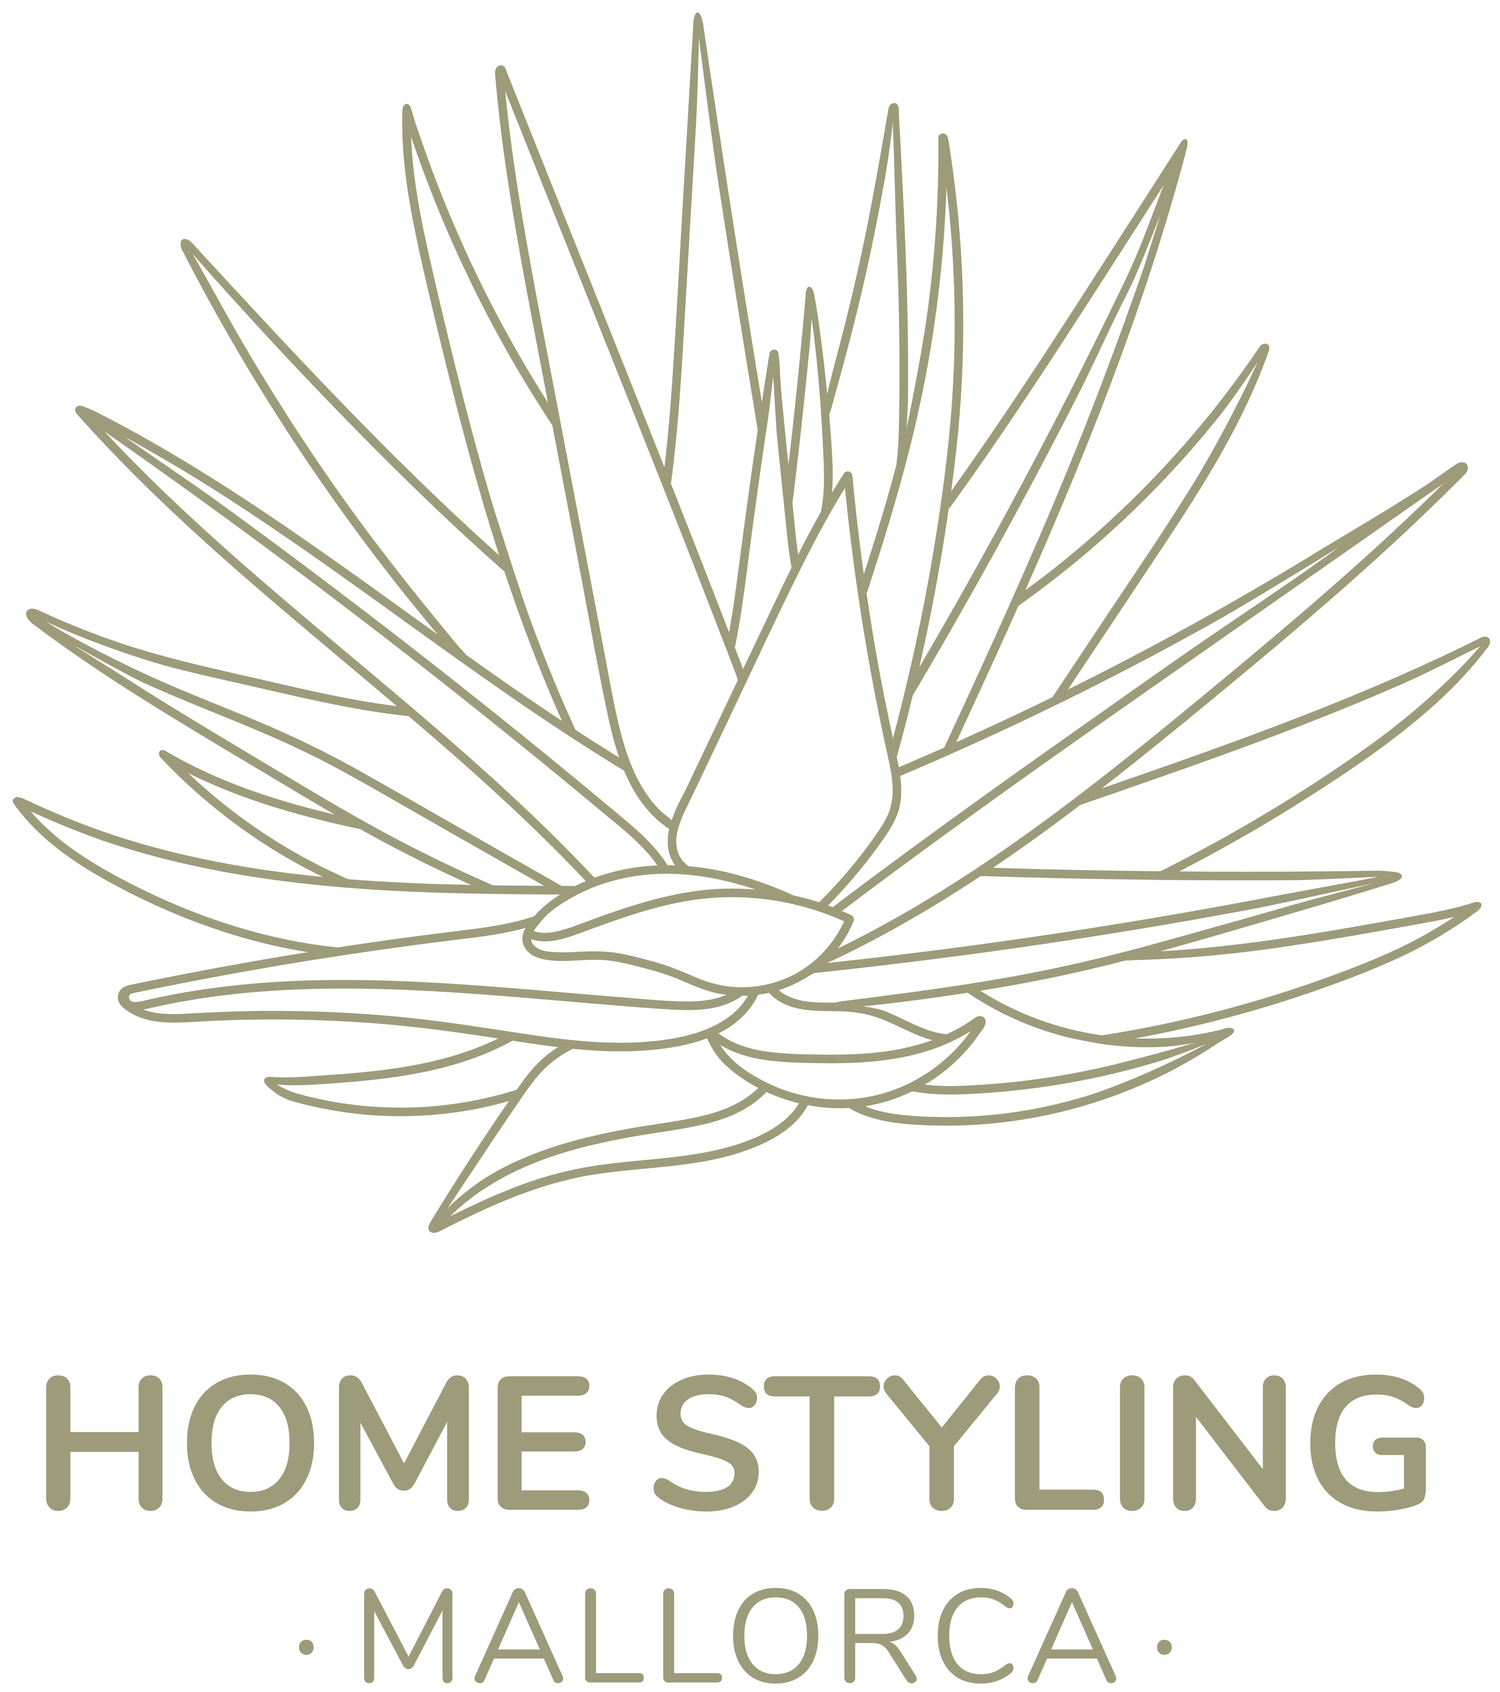 (c) Home-styling-mallorca.com